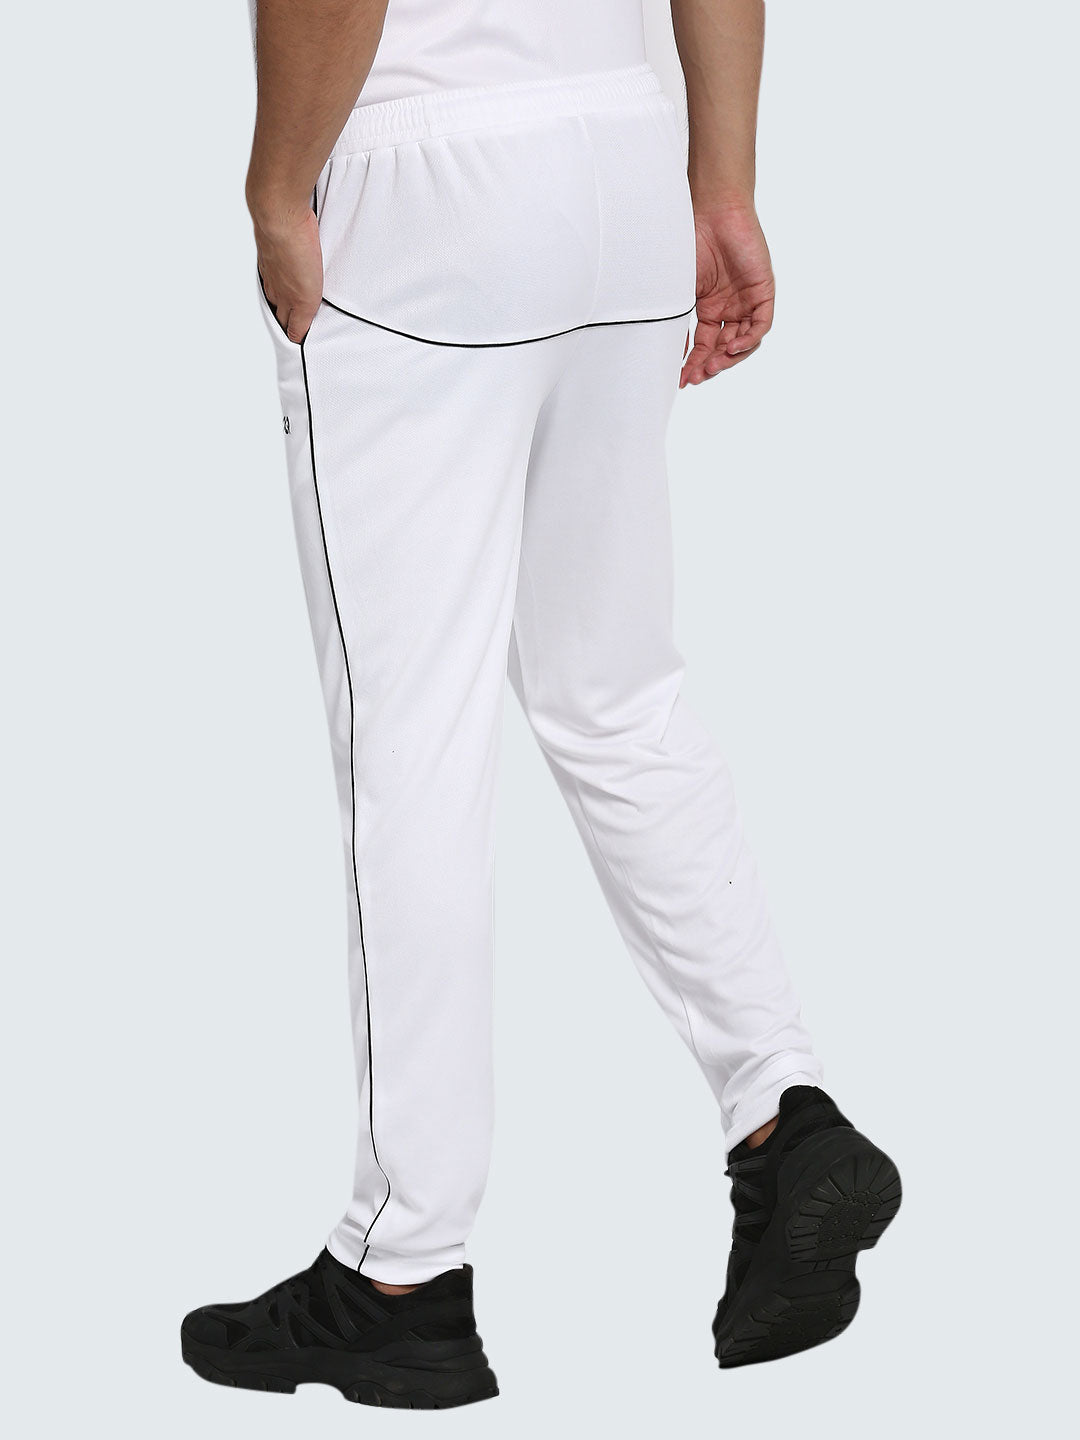 SG Century Cricket Trouser Pant Polyester Drimaxx - Cricket Best Buy